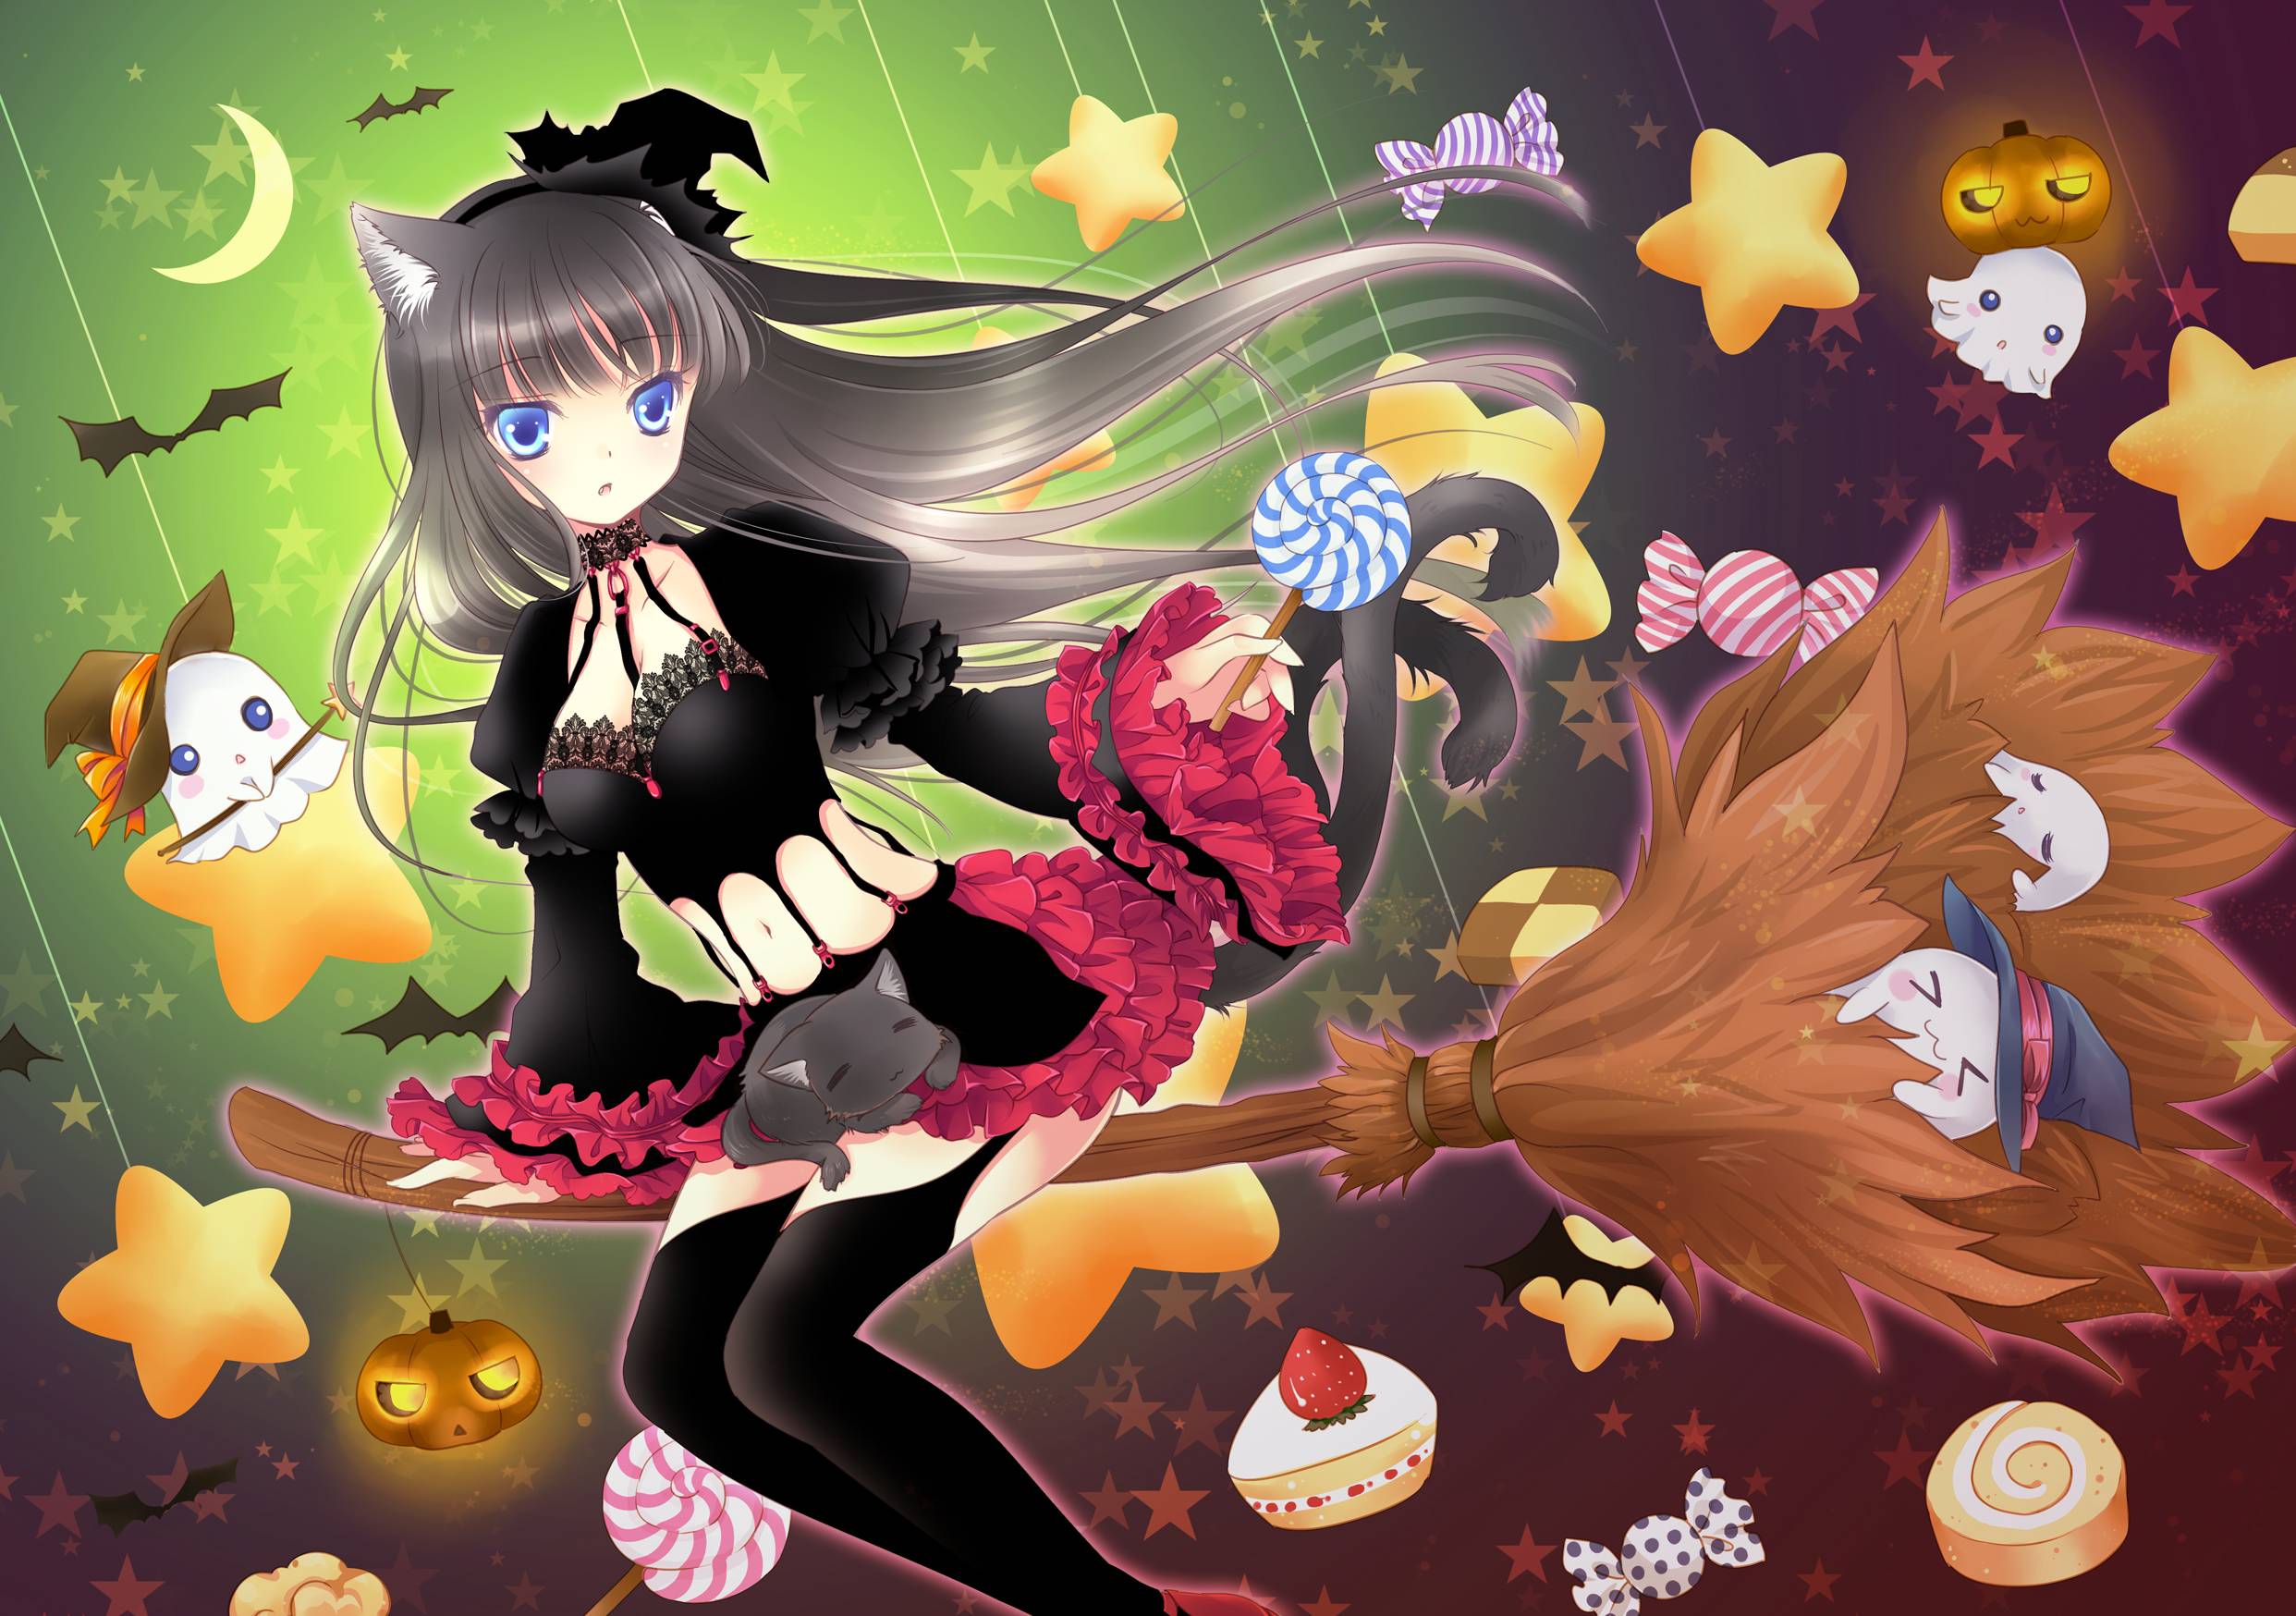 prompthunt: cute anime Halloween witch girl, sanrio style-demhanvico.com.vn